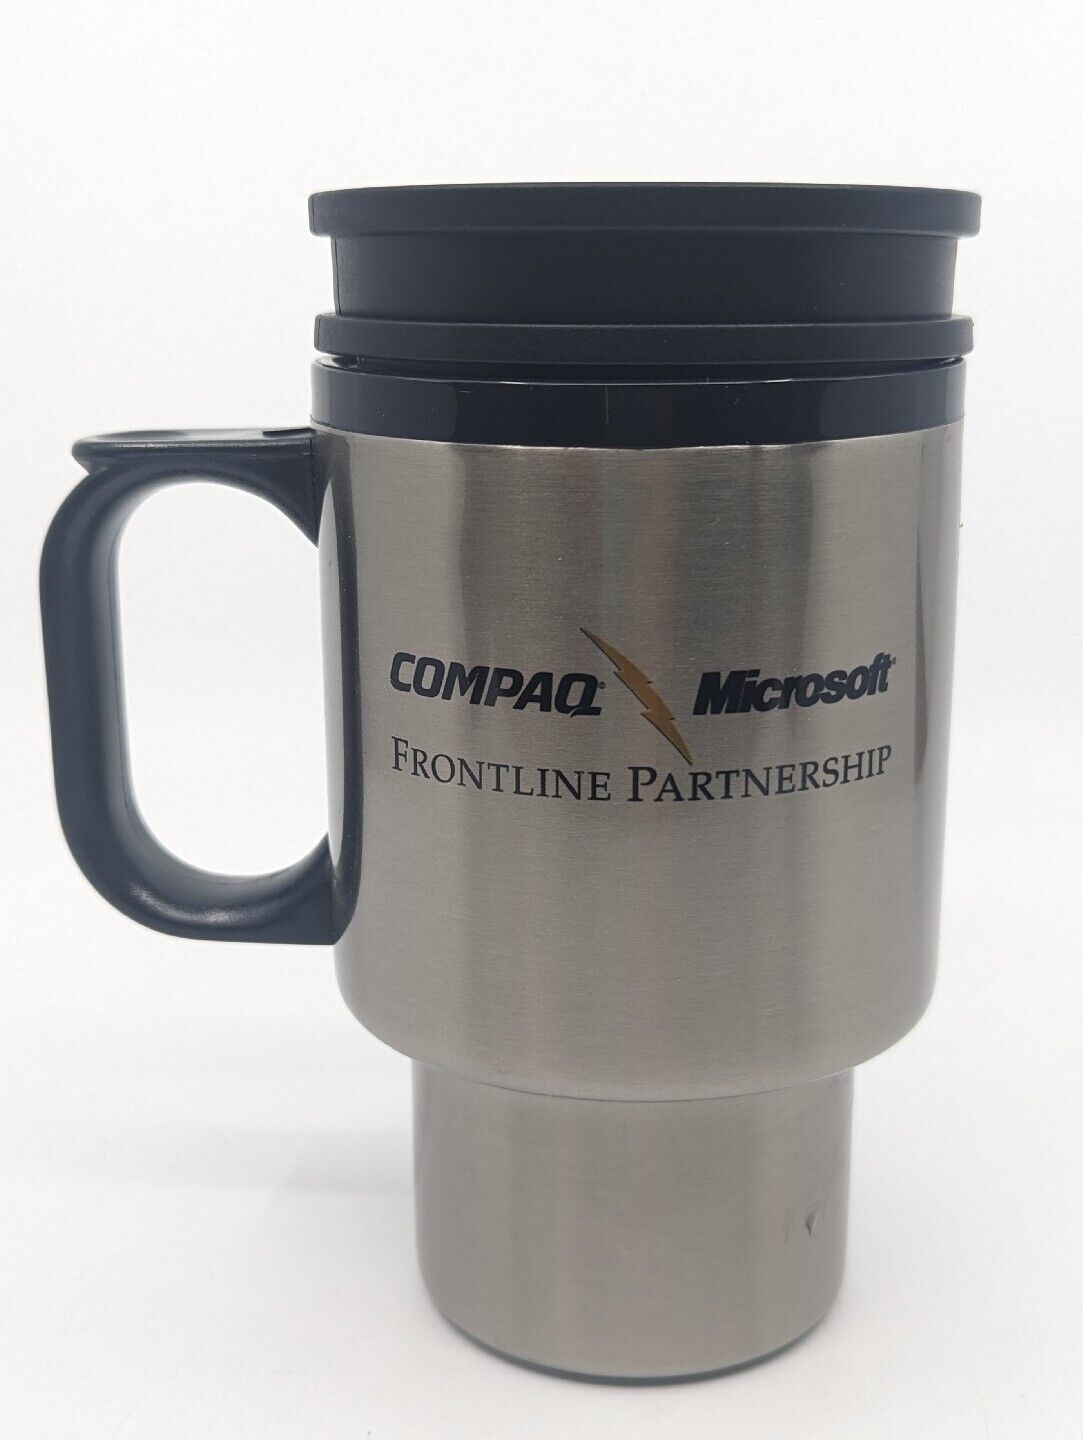 Vintage NOS Microsoft Frontline Partnership Stainless Steel Traveller Coffee Cup